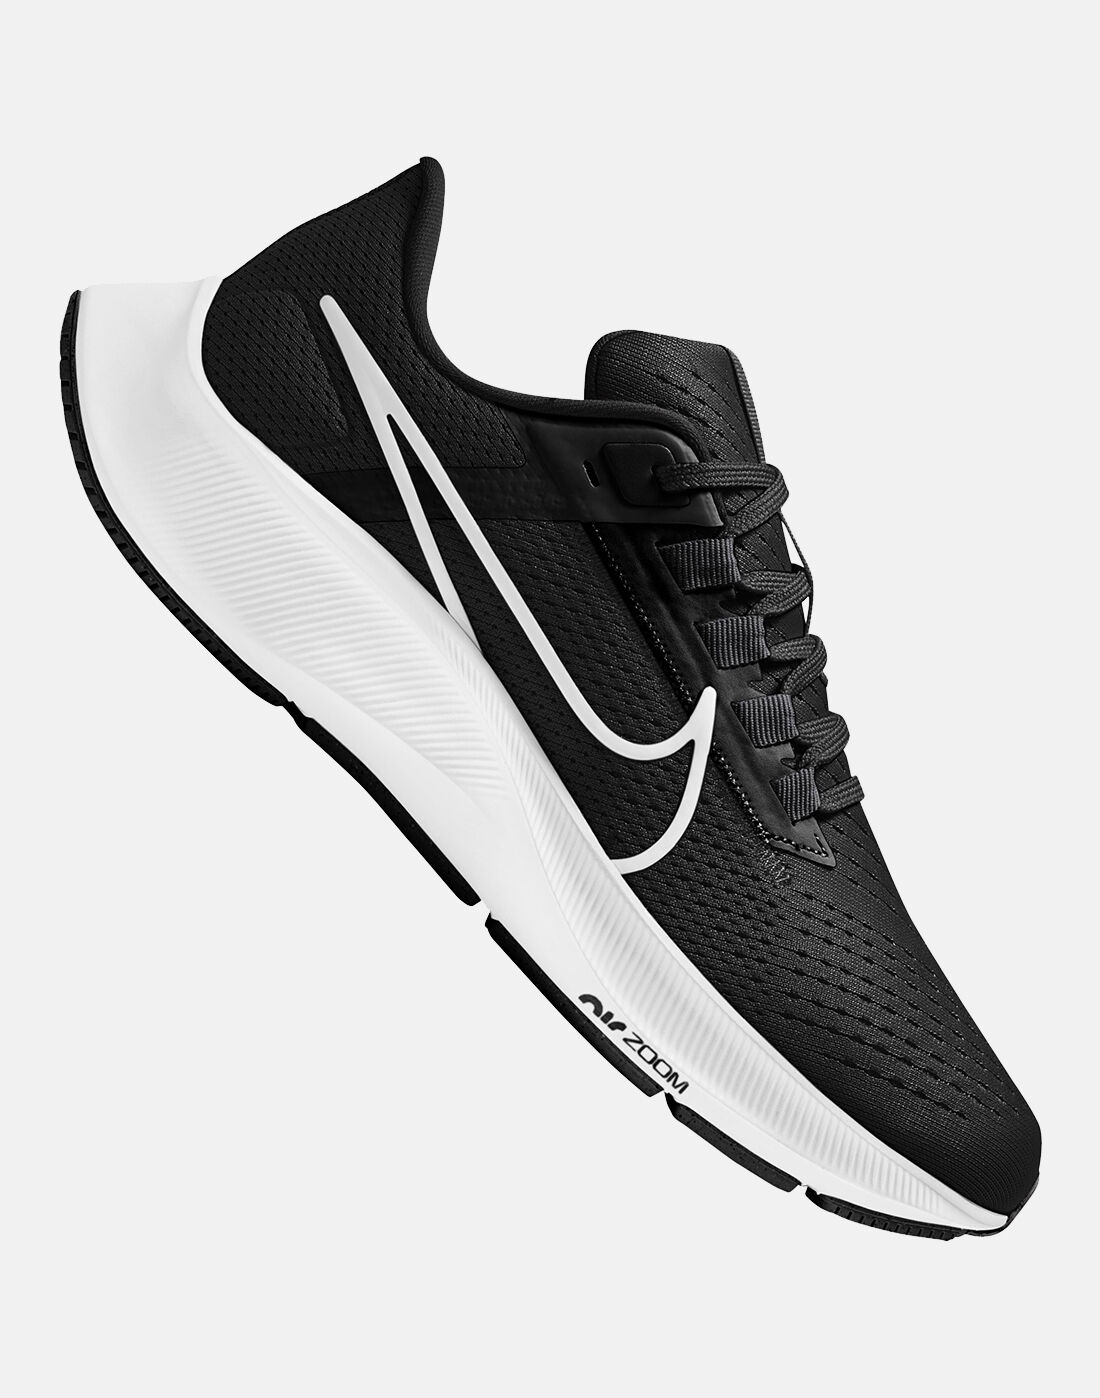 Nike Womens Advent Zoom Pegasus 38 | nike air zoom terra kiger 4 hyper  crimson edition IE - store nike jordan spizike shoe outlet sale today -  Black